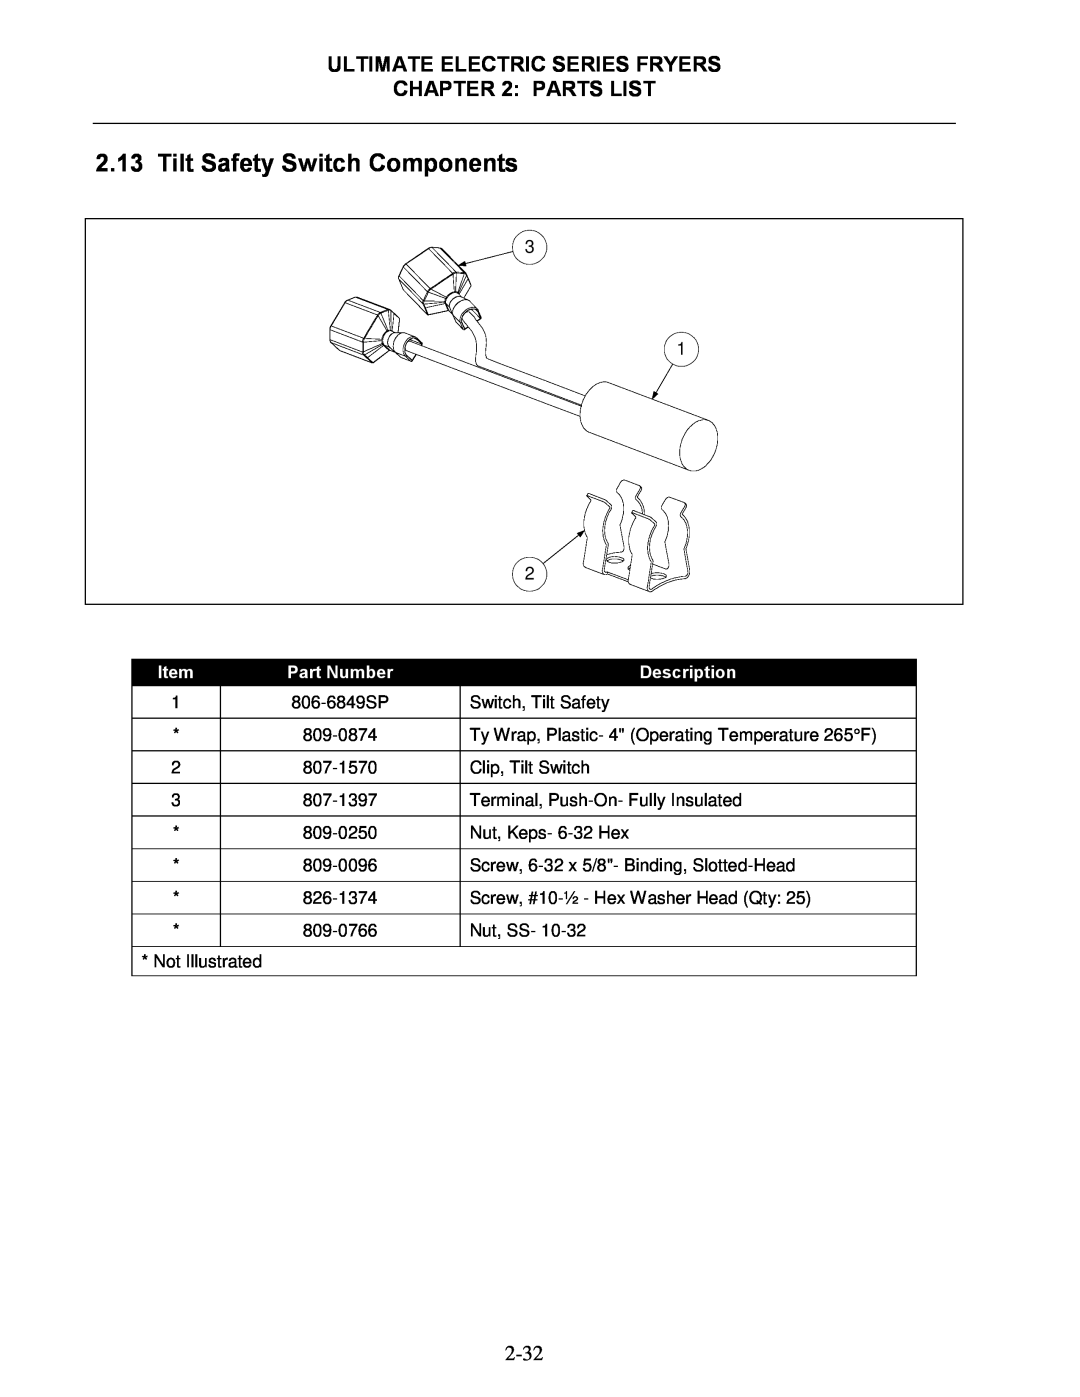 Frymaster manual Tilt Safety Switch Components, Ultimate Electric Series Fryers, Parts List, Part Number, Description 